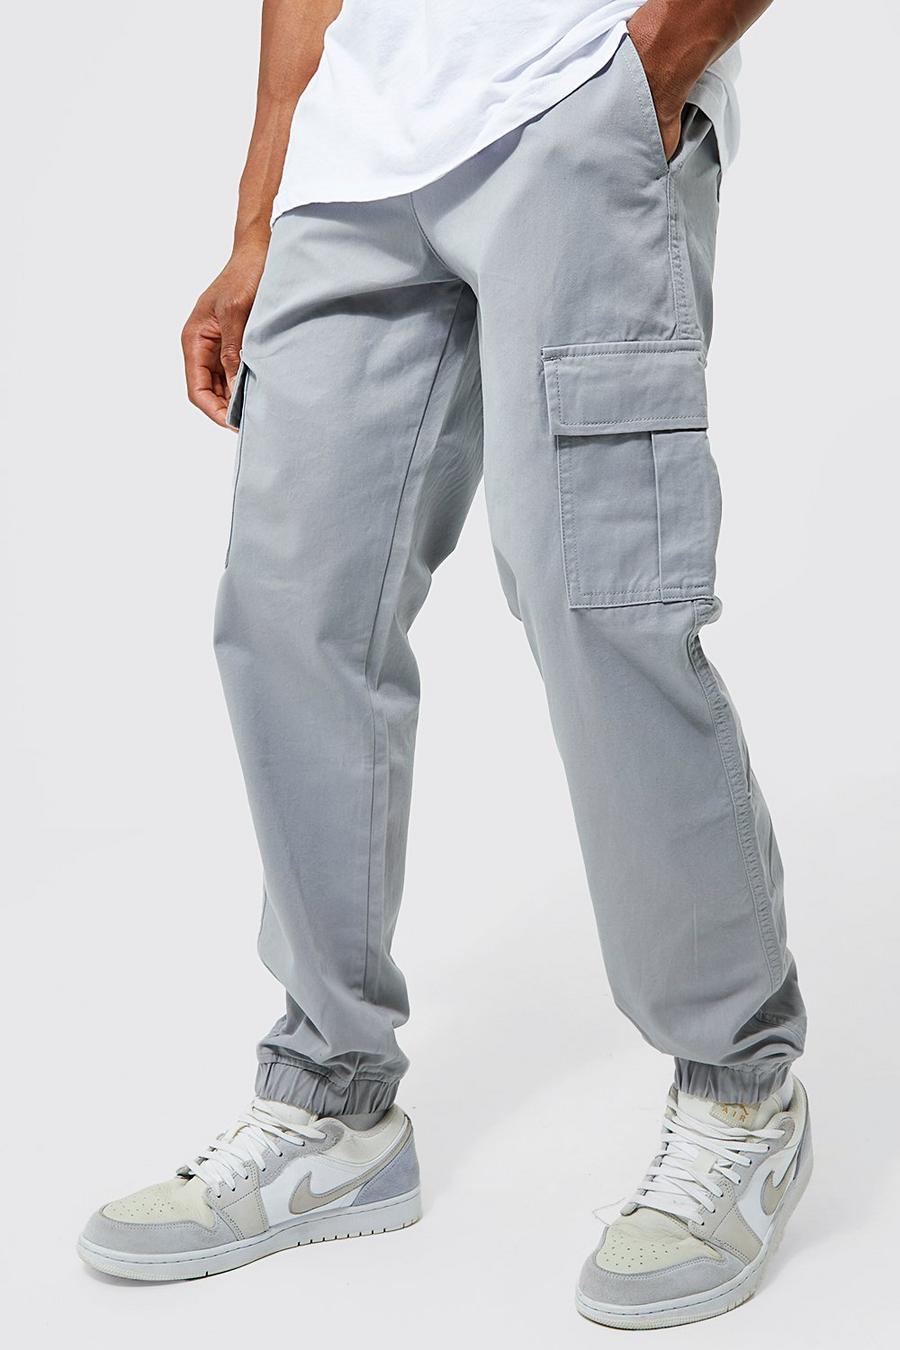 Grey grigio מכנסי דגמ"ח טוויל בגזרה צרה image number 1